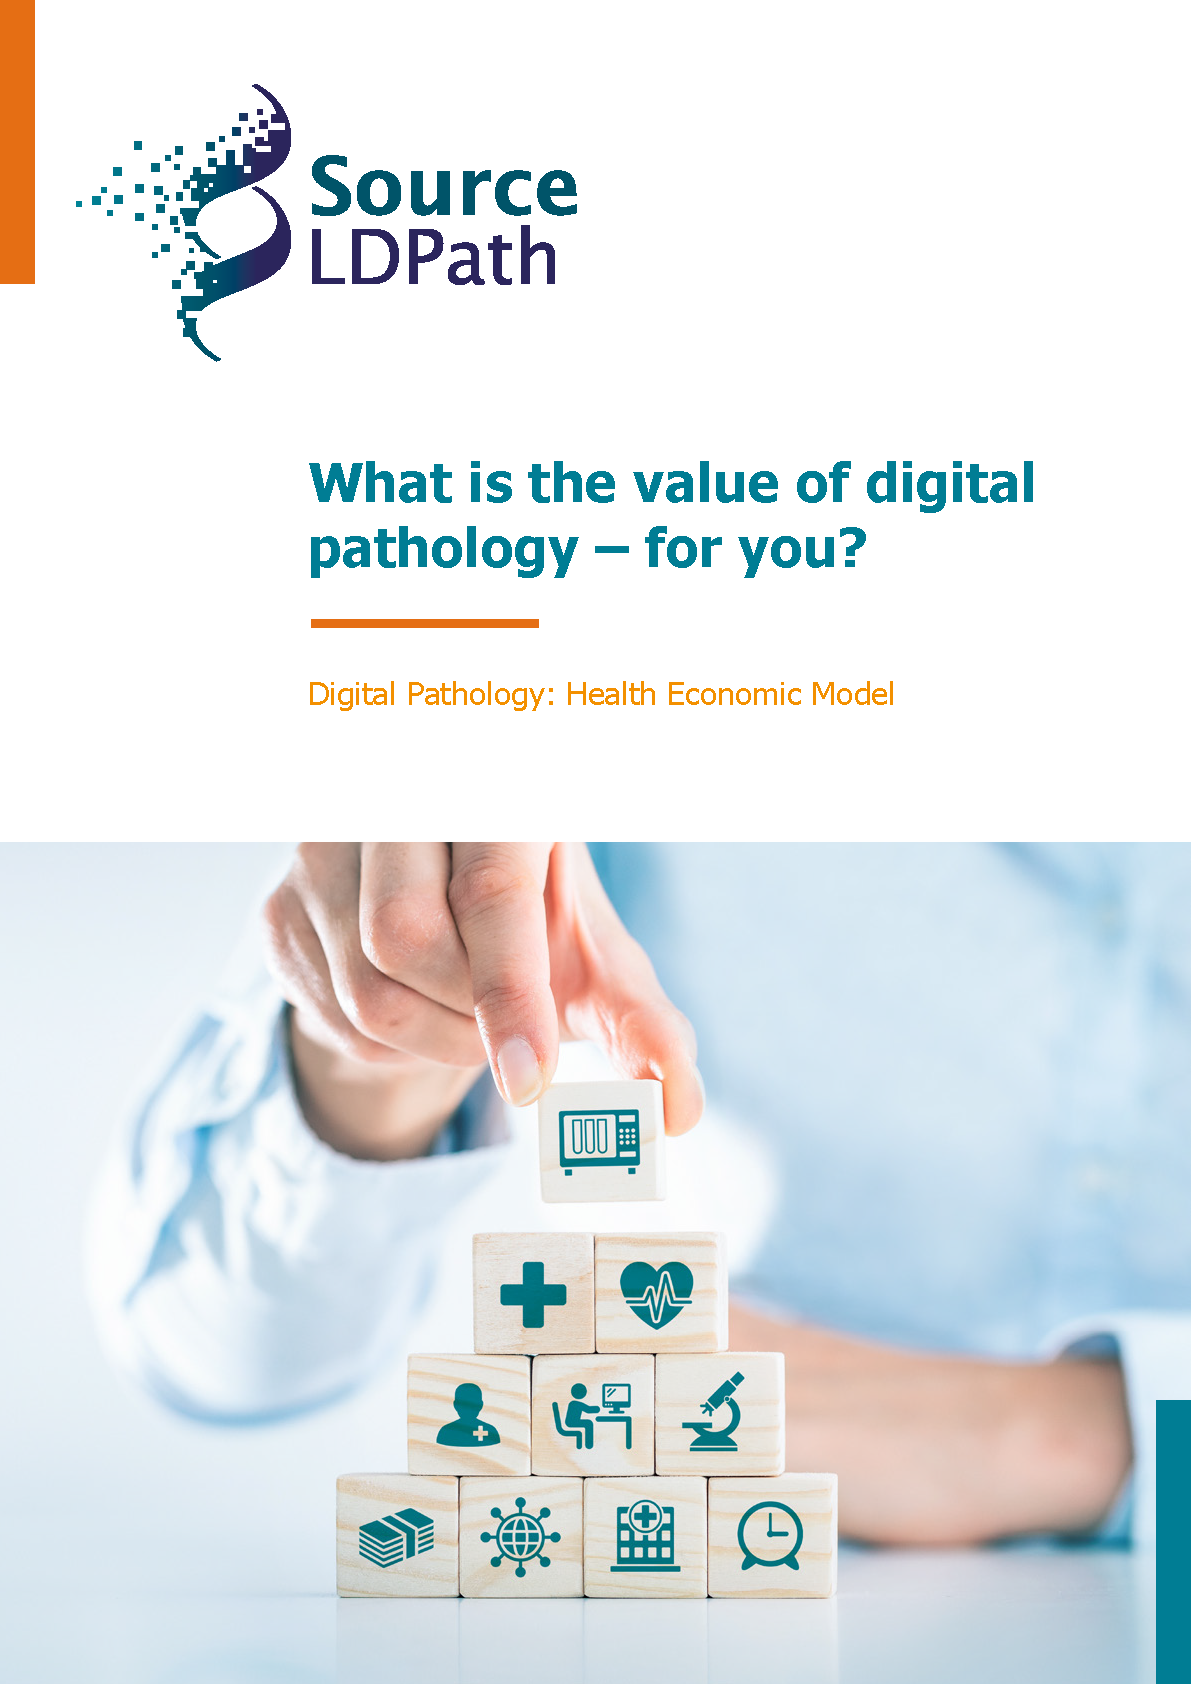 The Value of Digital Pathology HEM